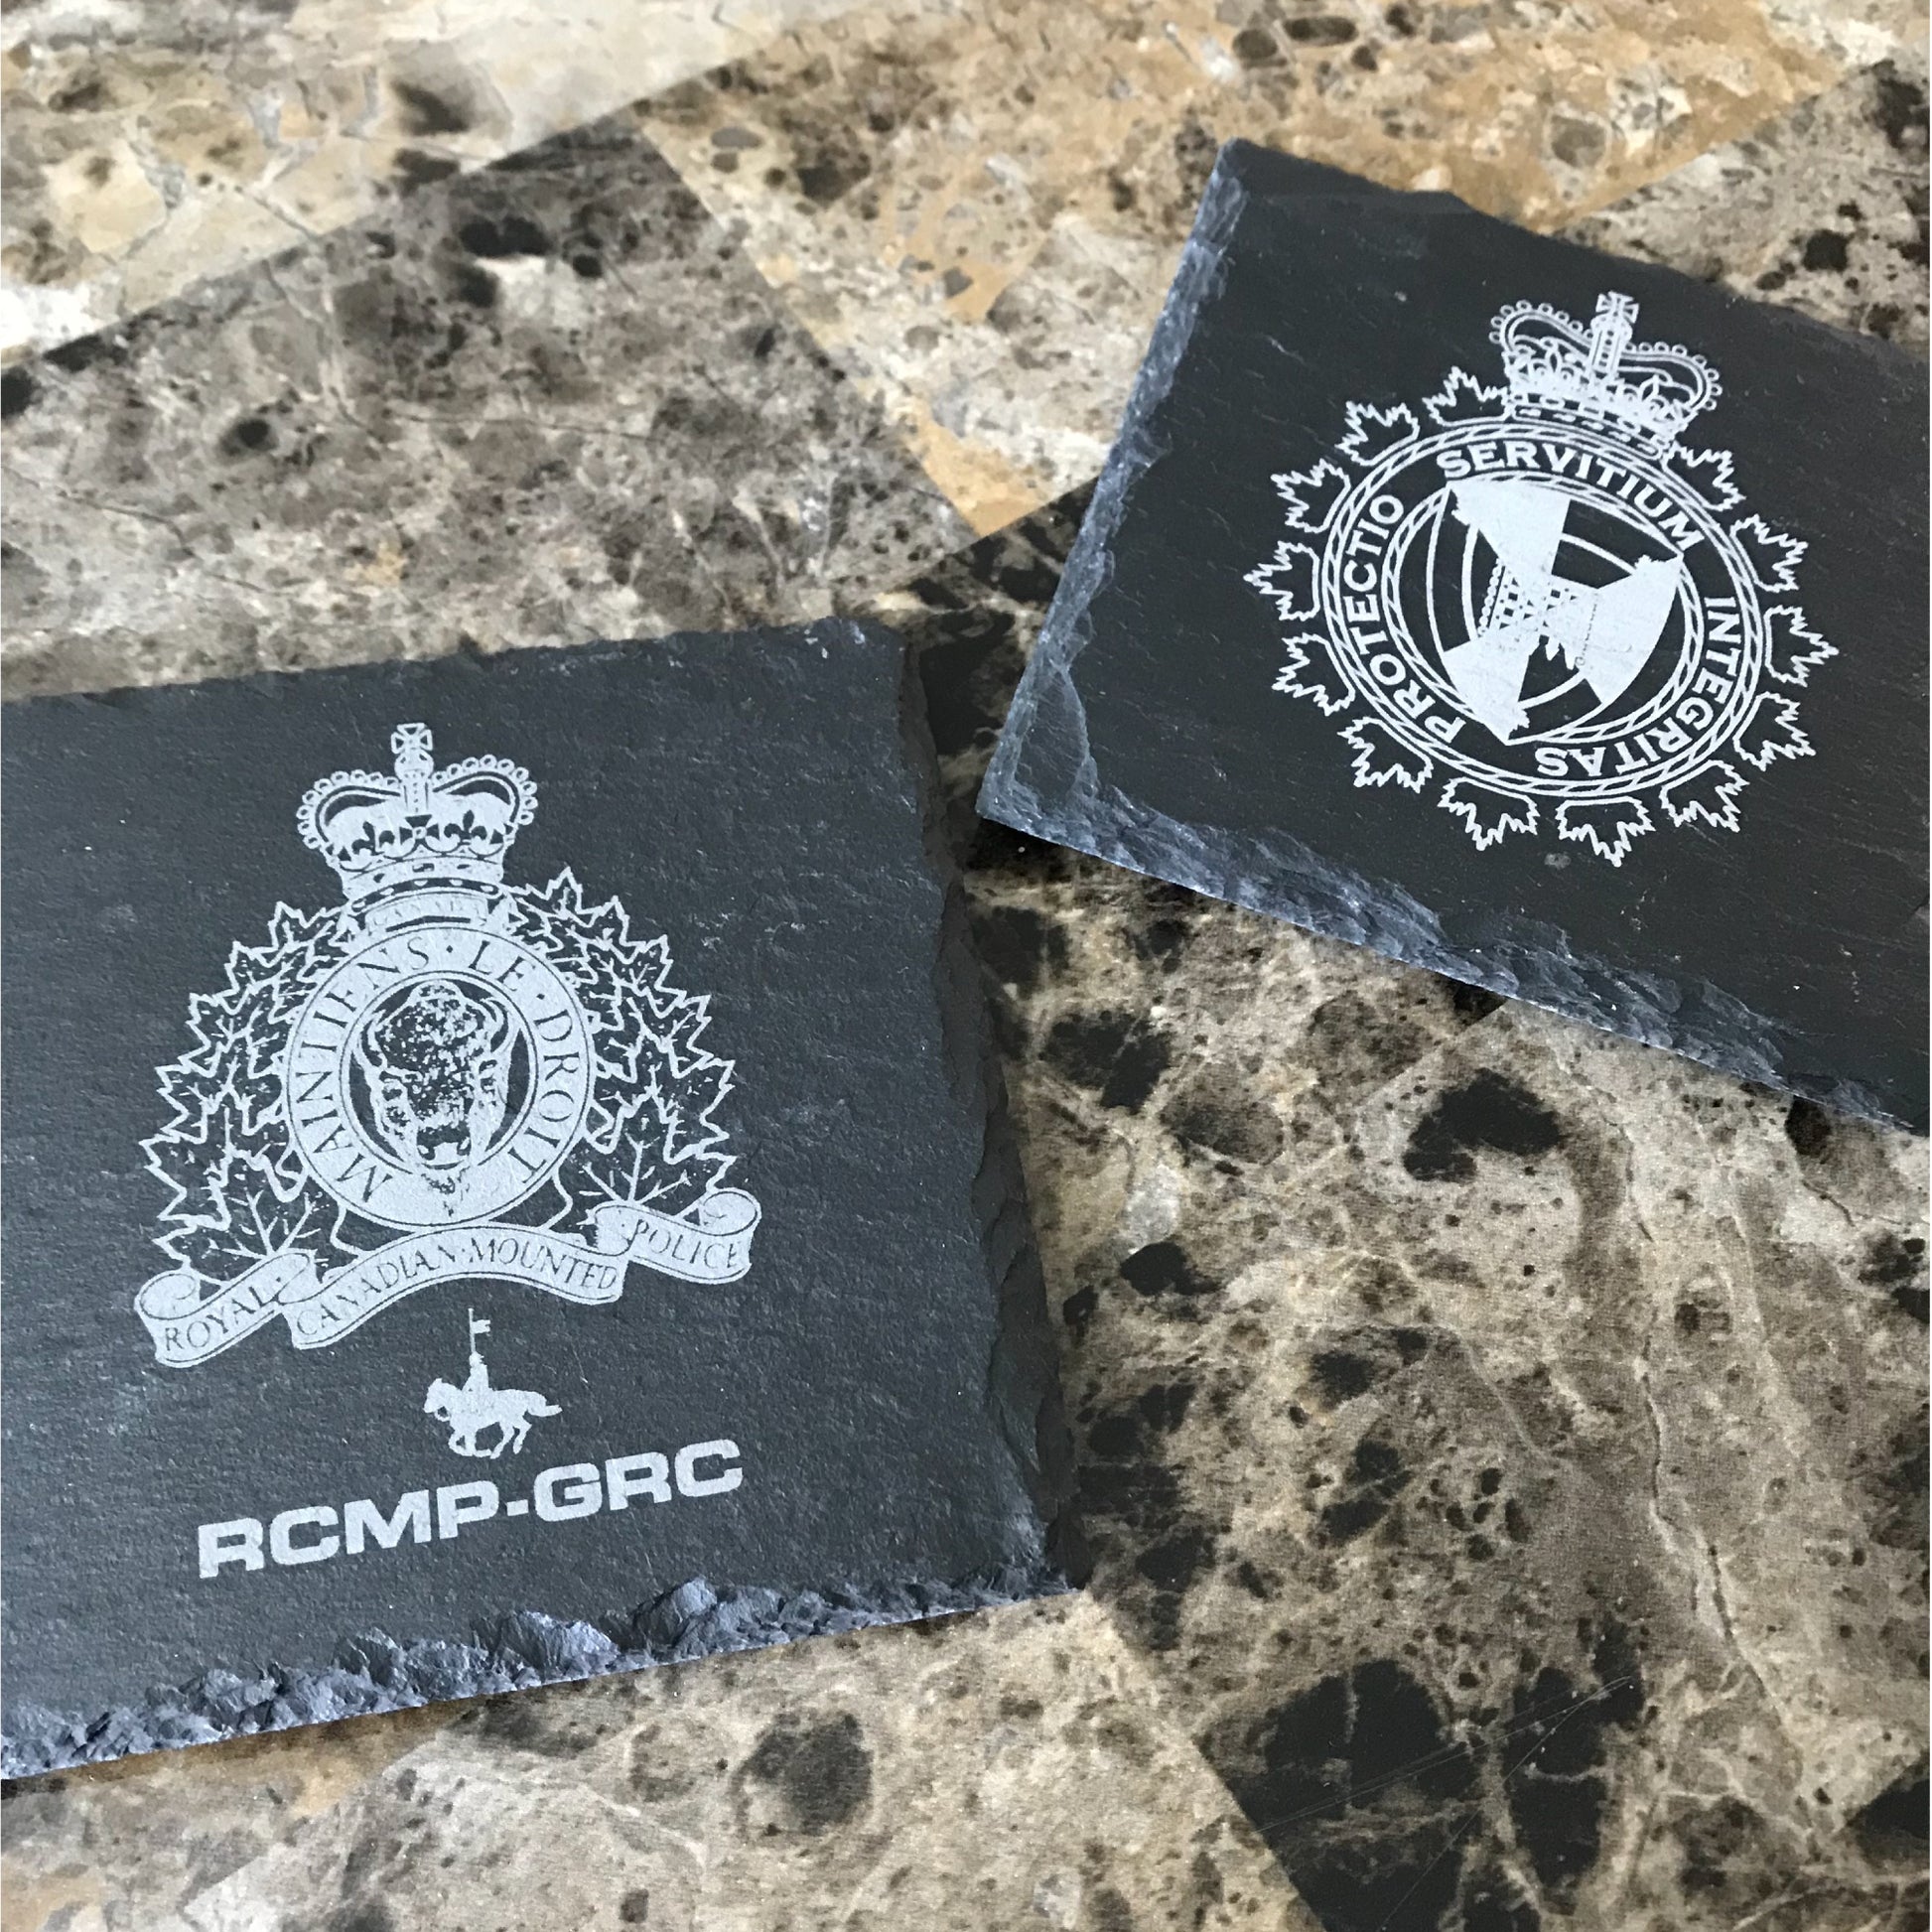 AHS Peace Officer Stone Slate Coasters-911 Duty Gear-911 Duty Gear Canada